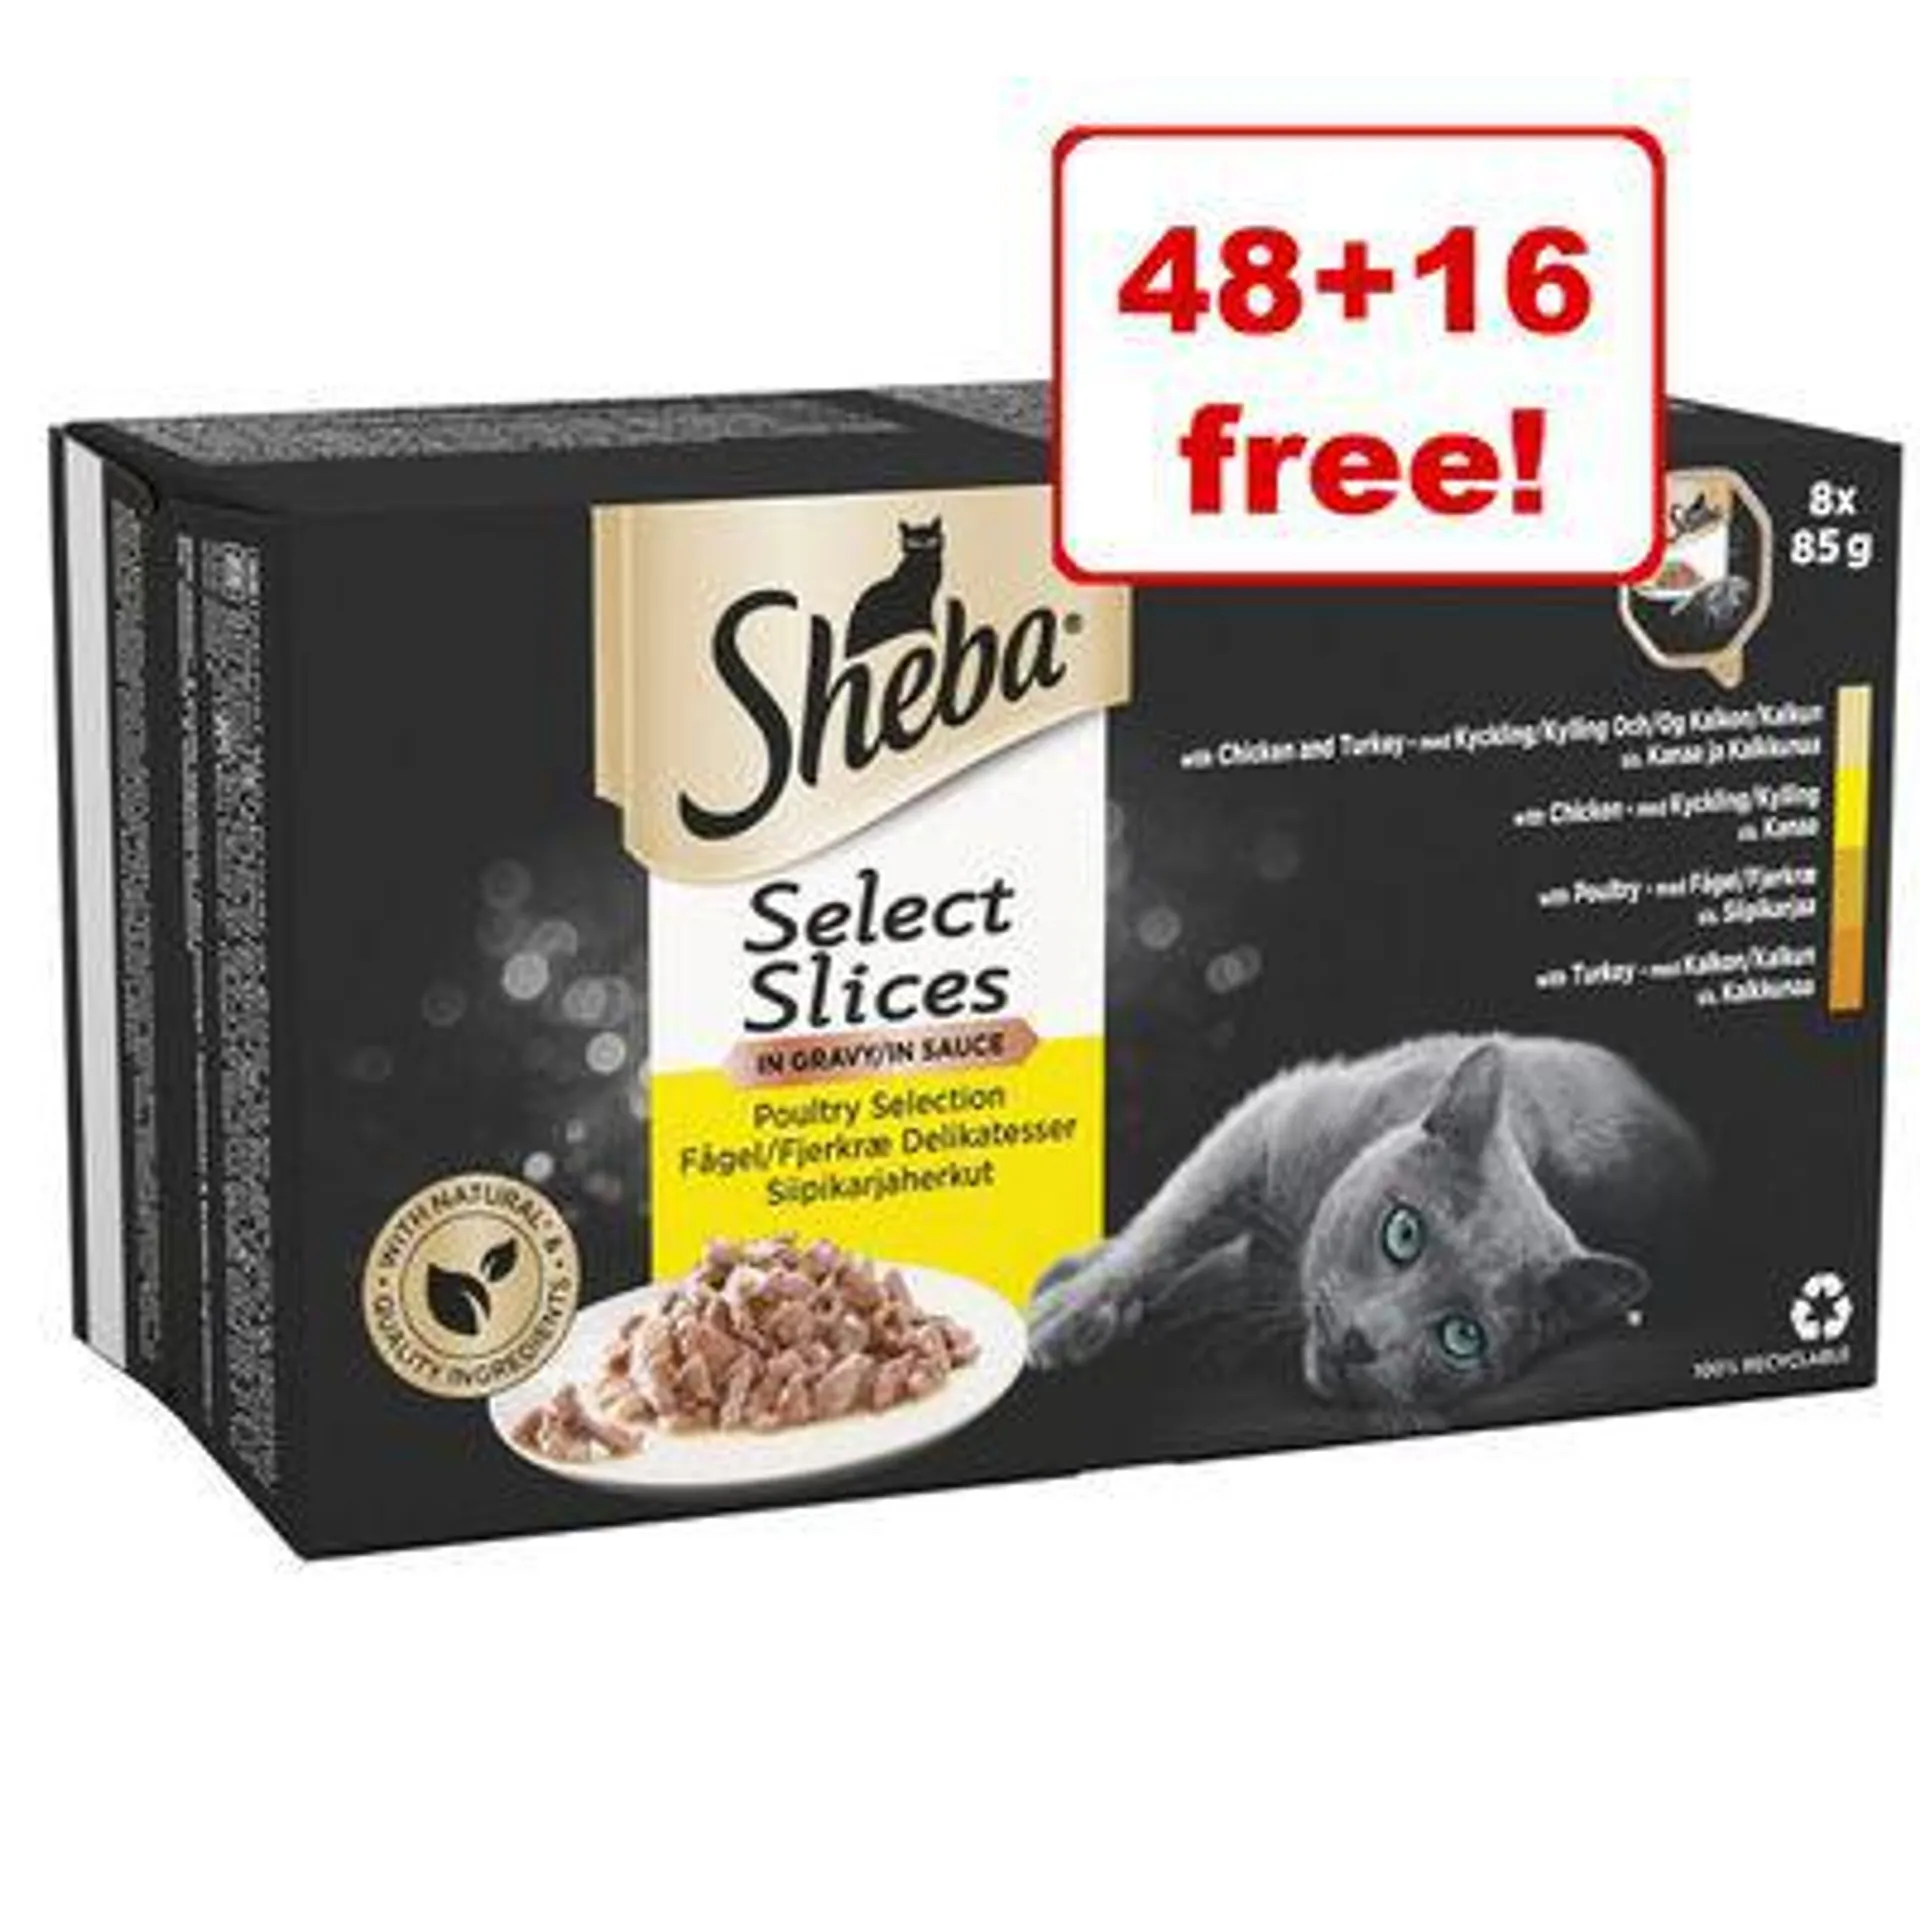 64 x 85g Sheba Wet Cat Food - 48 + 16 Free!*